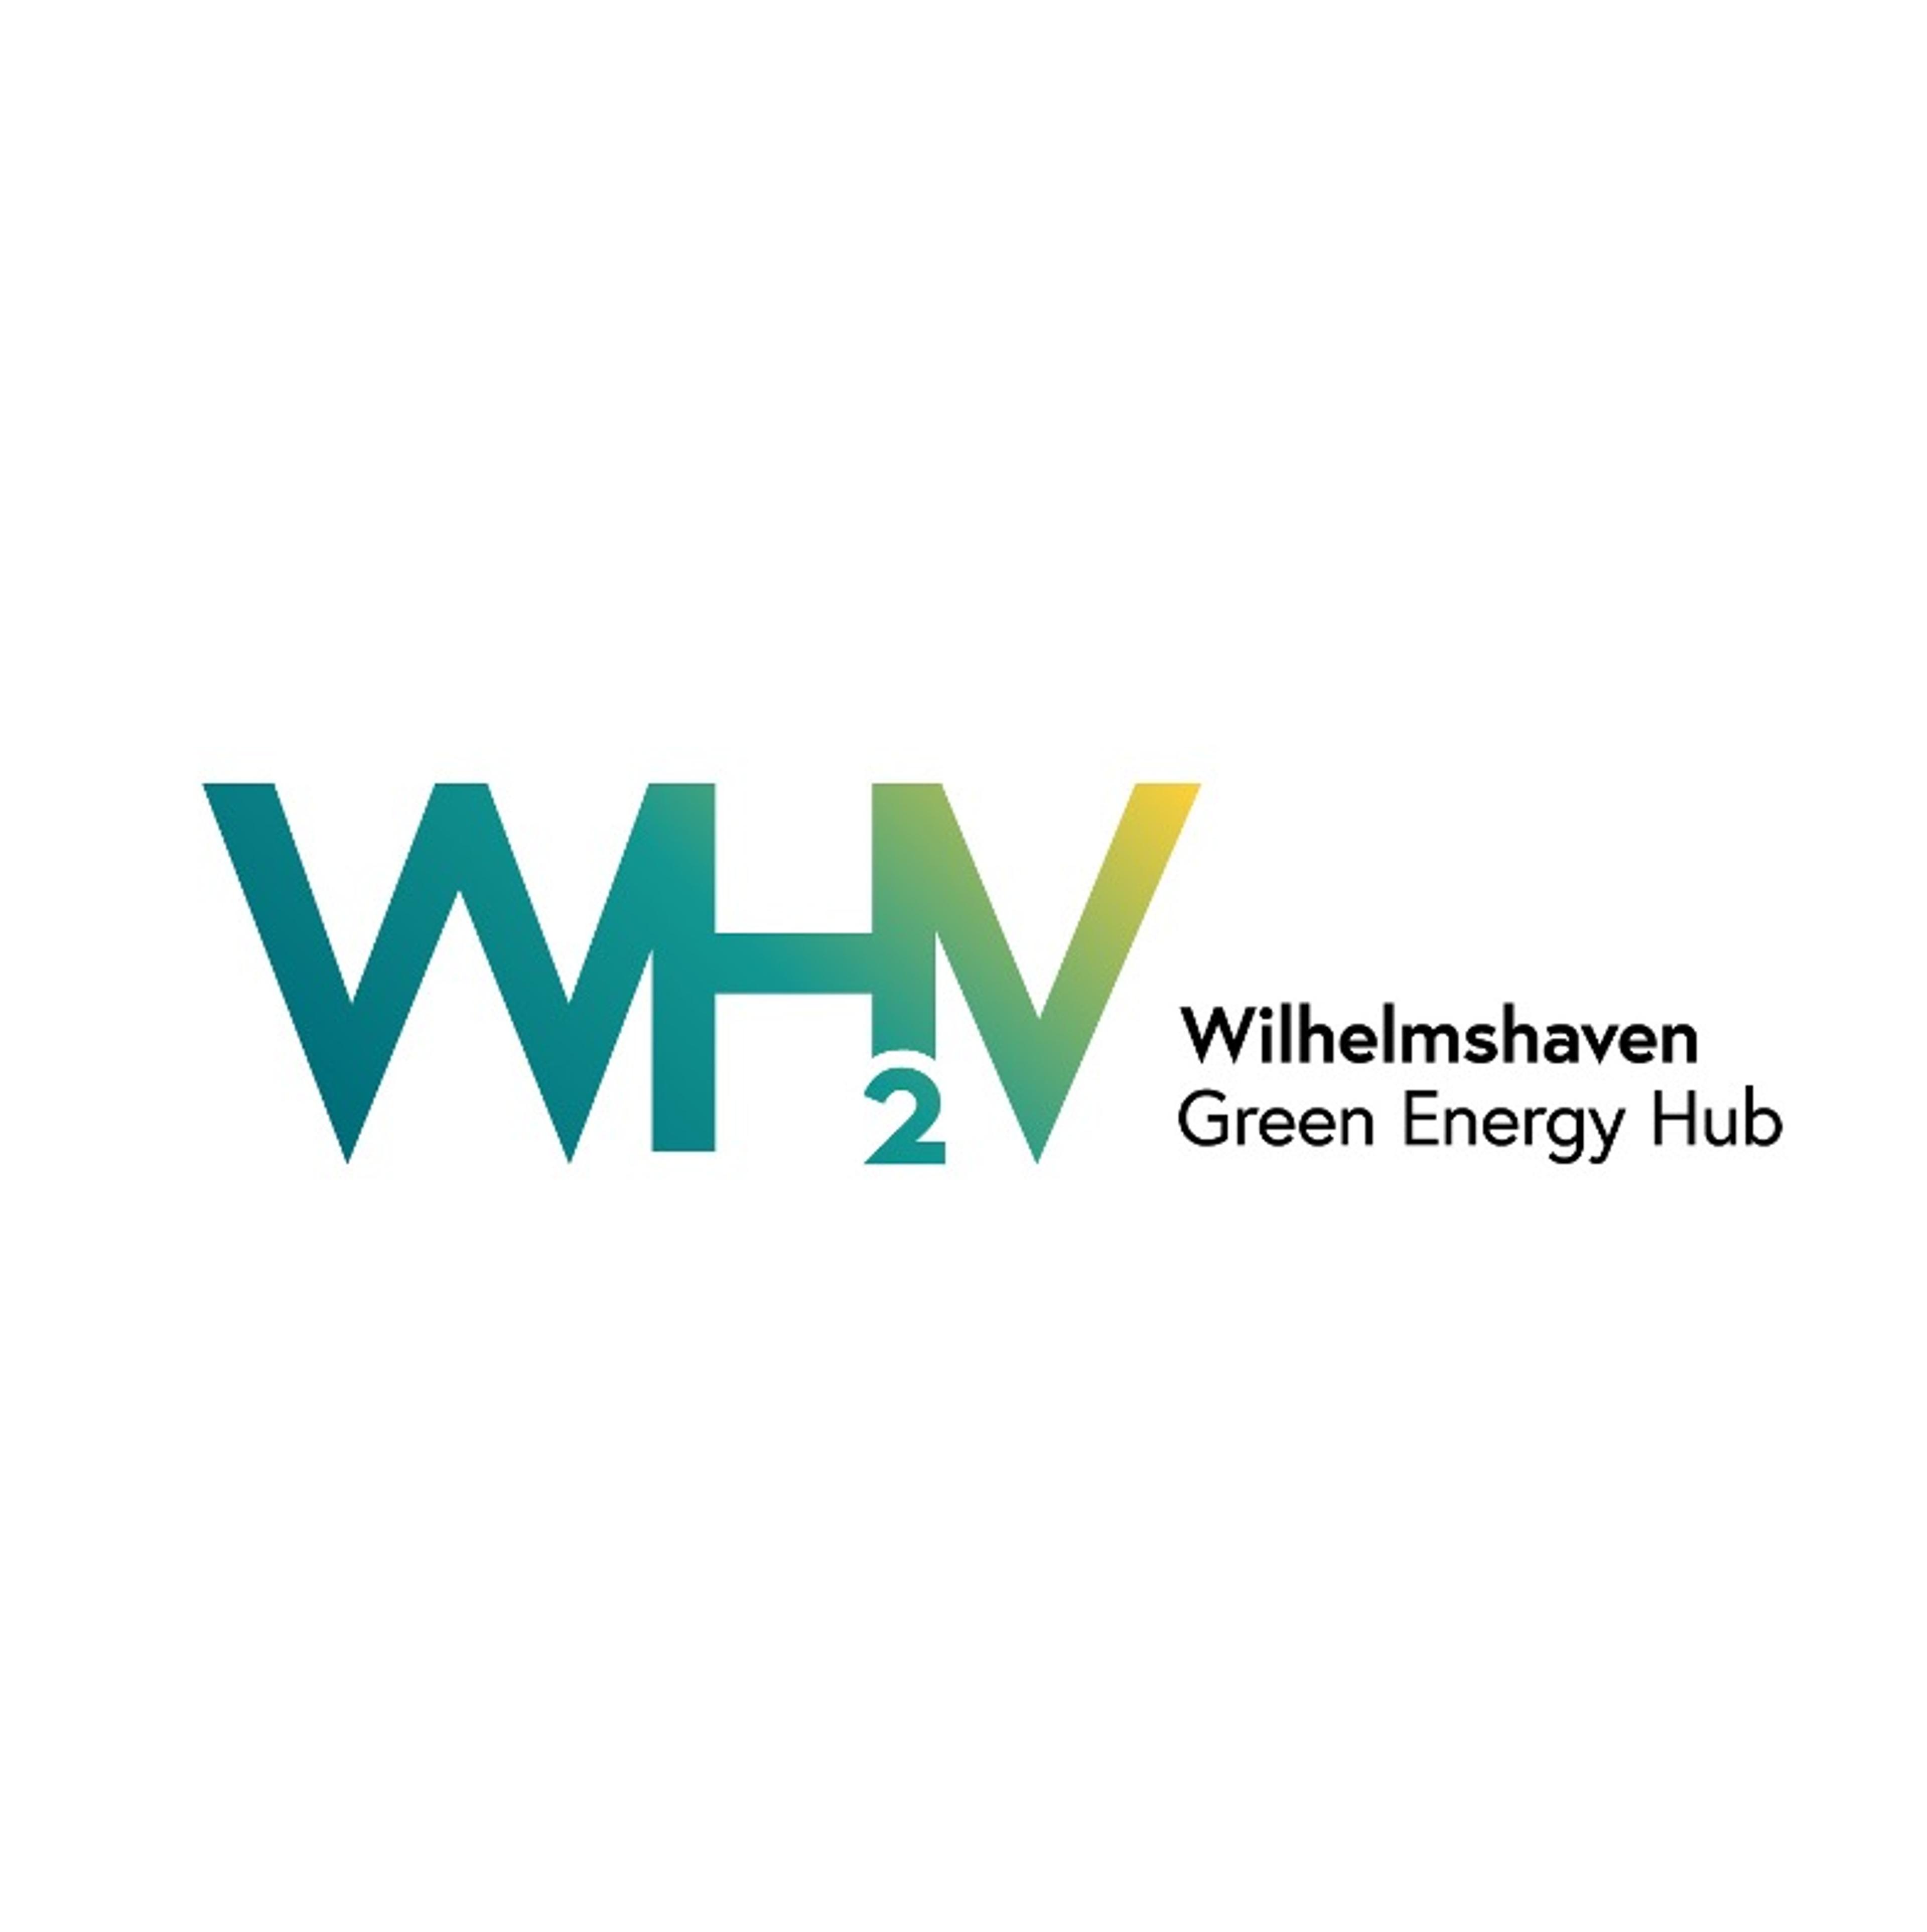 Wilhelmshaven Green Energy Hub